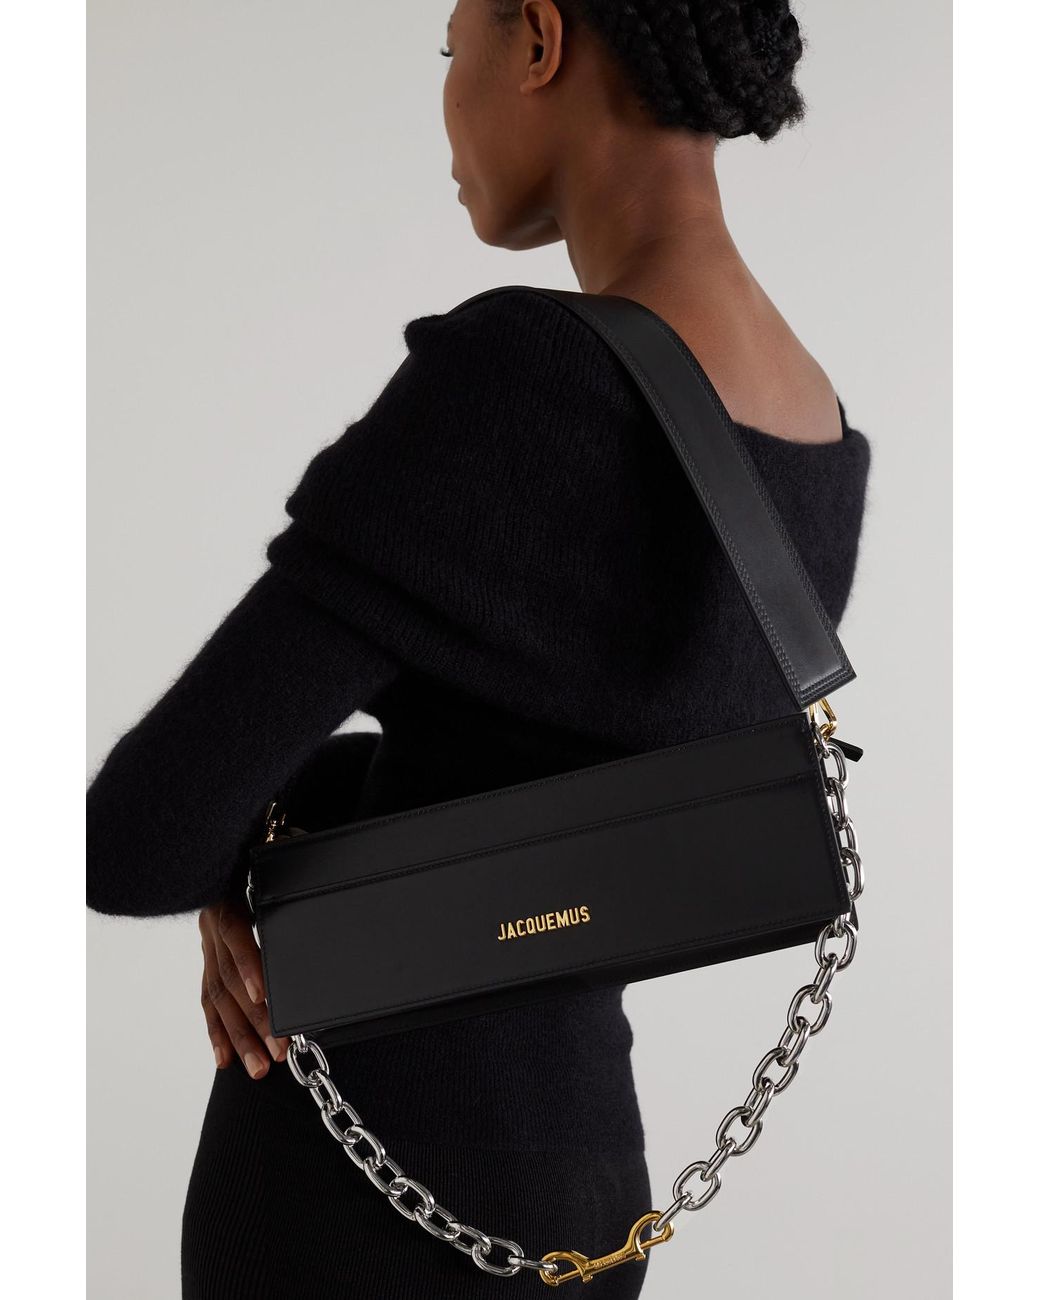 Jacquemus Le Ciuciu Leather Shoulder Bag in Black | Lyst Canada